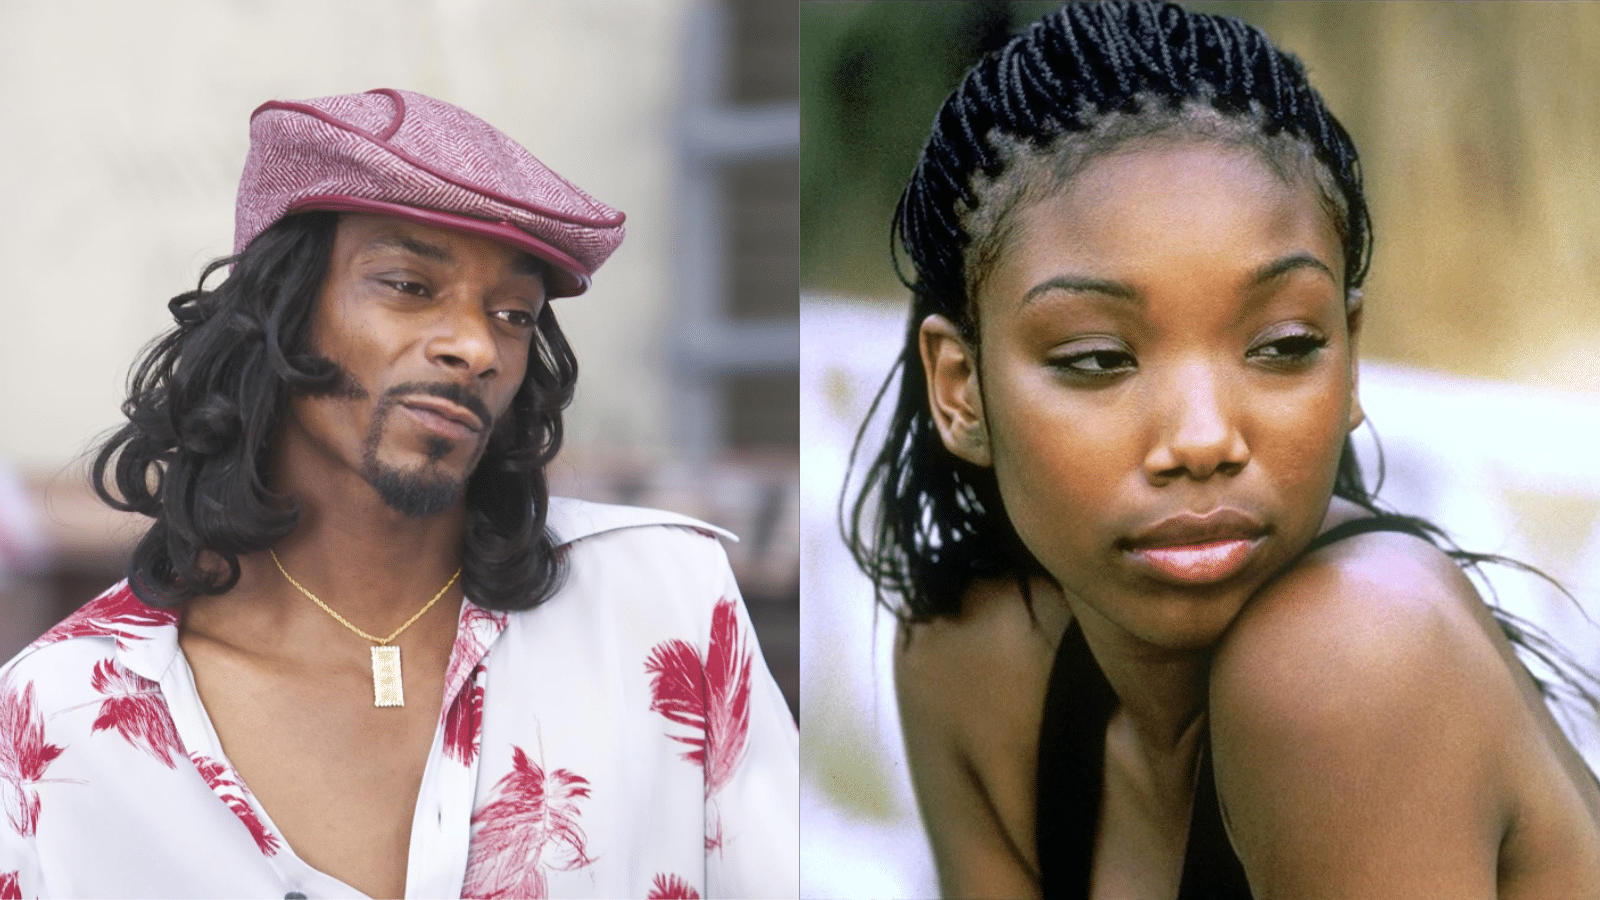 Snoop Dogg and Brandy Norwood